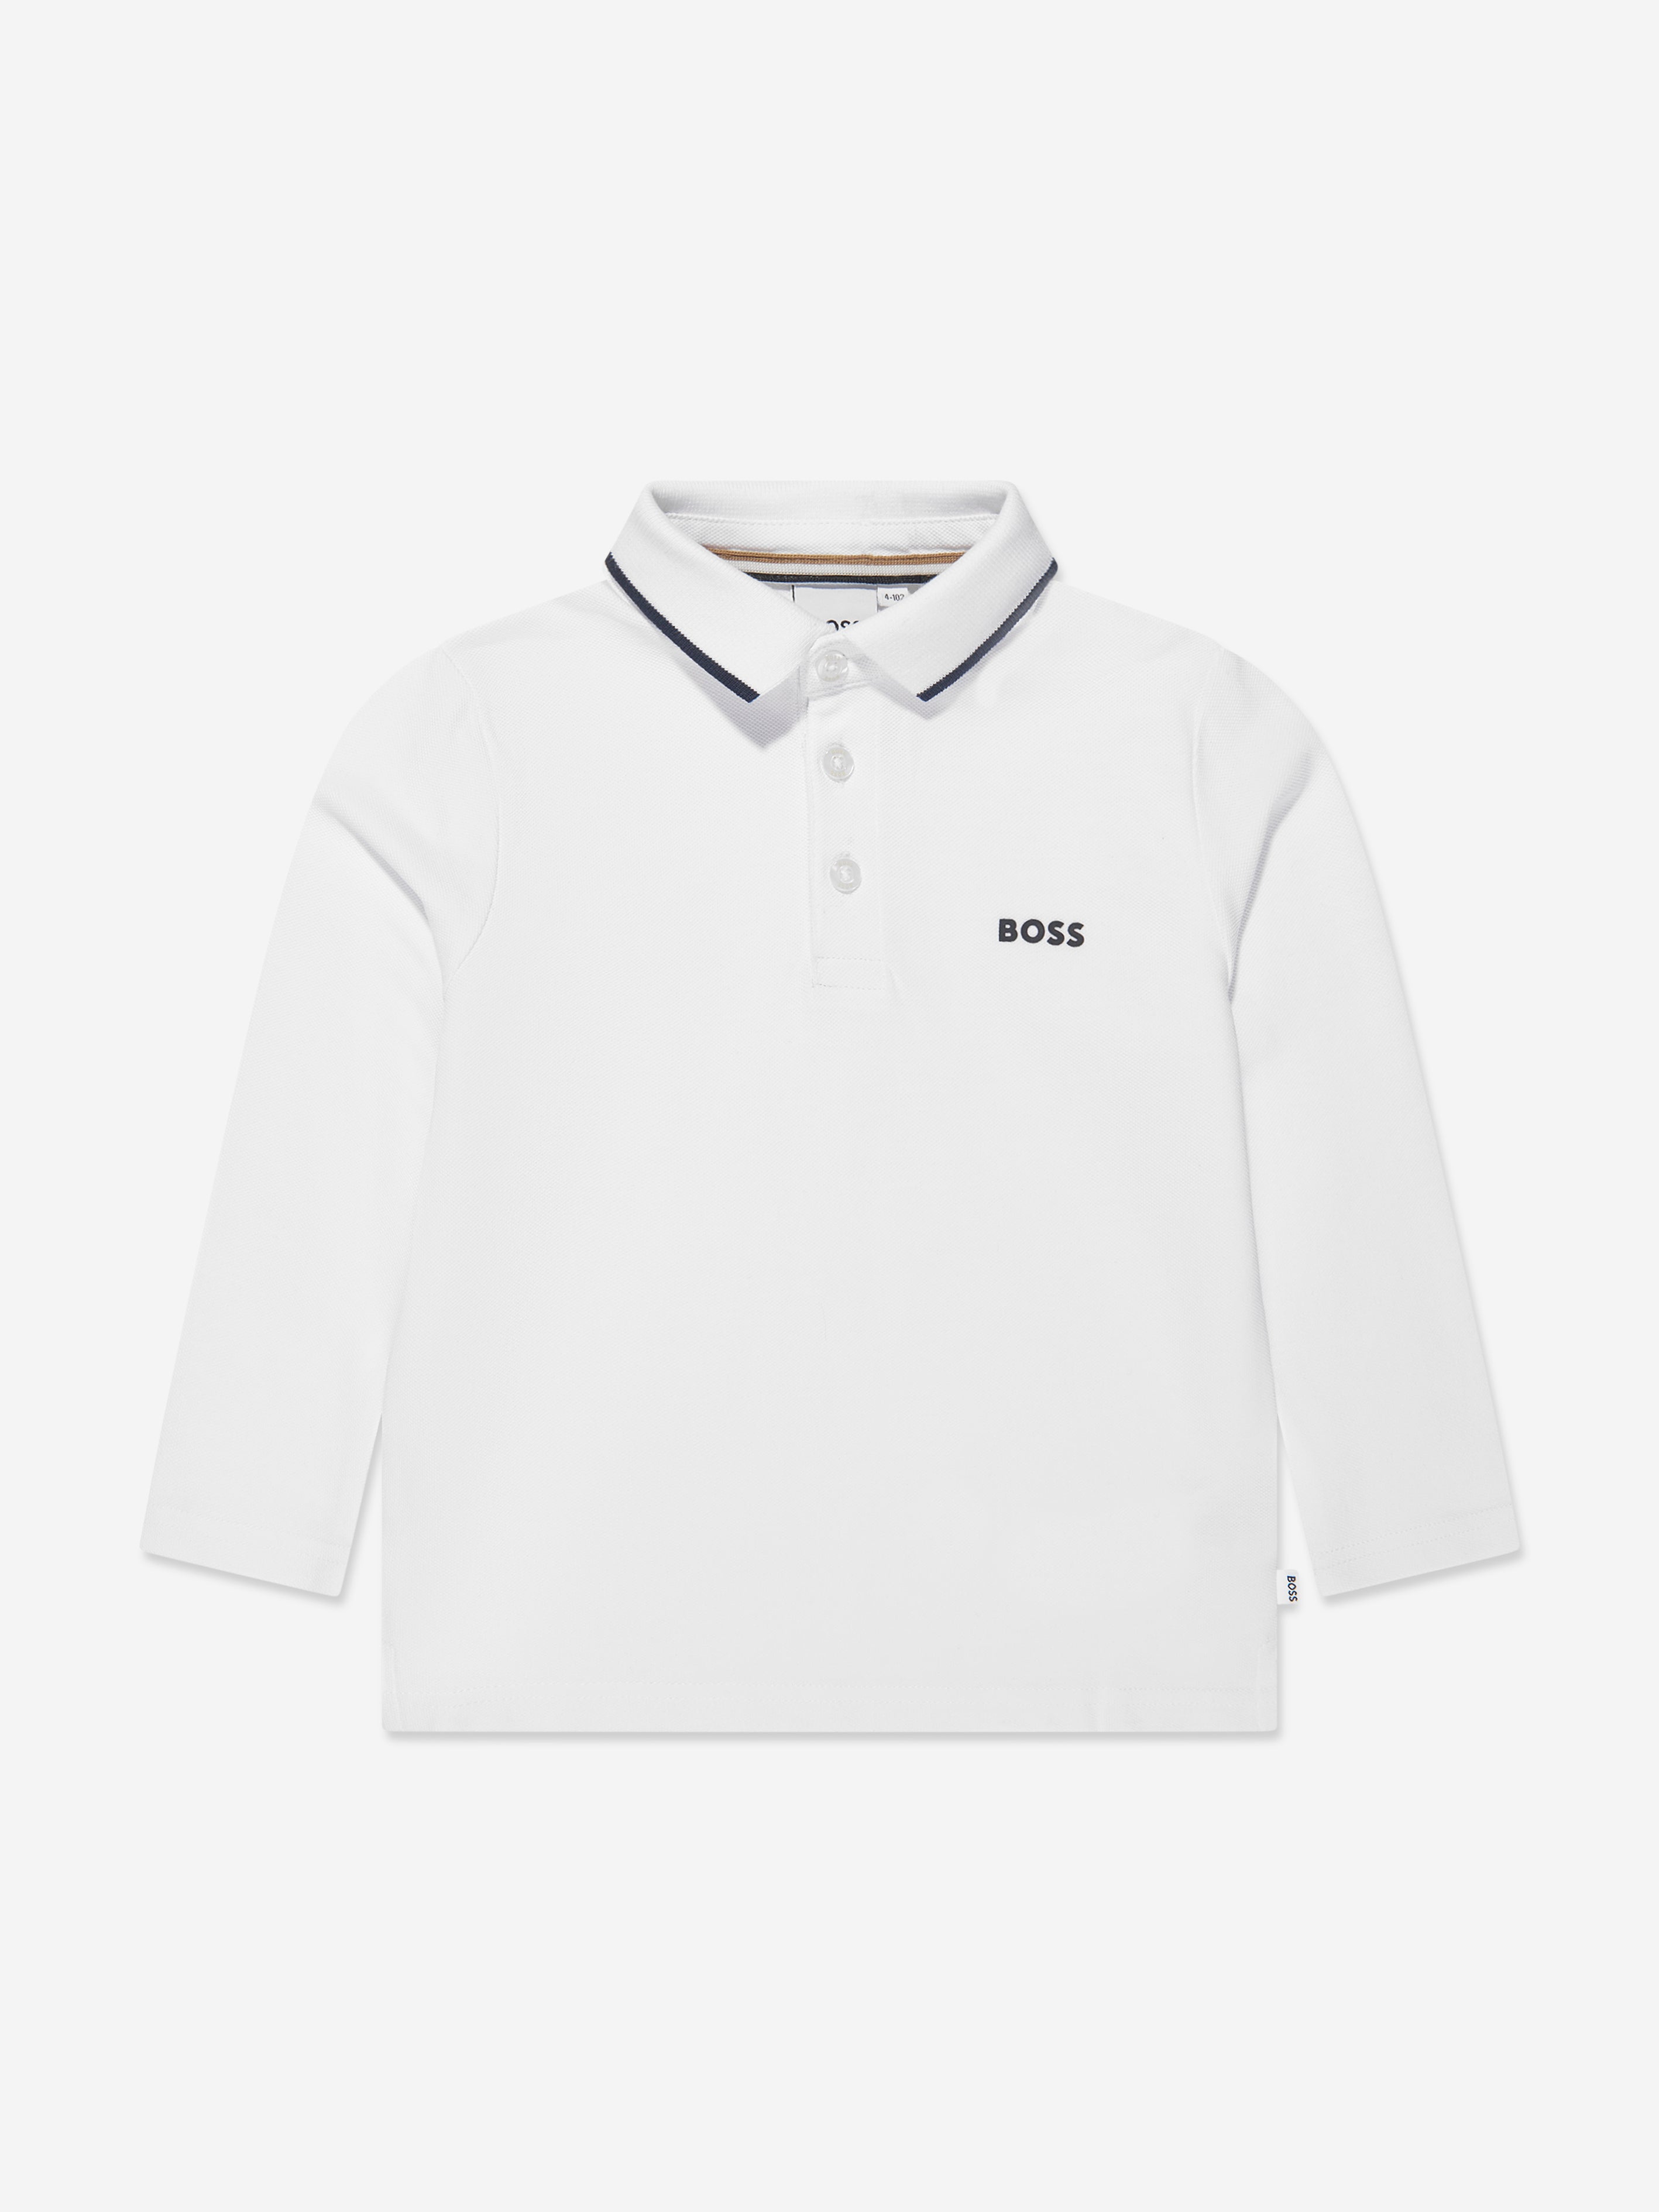 Boys Long Sleeve Polo Shirt in White | Childsplay Clothing